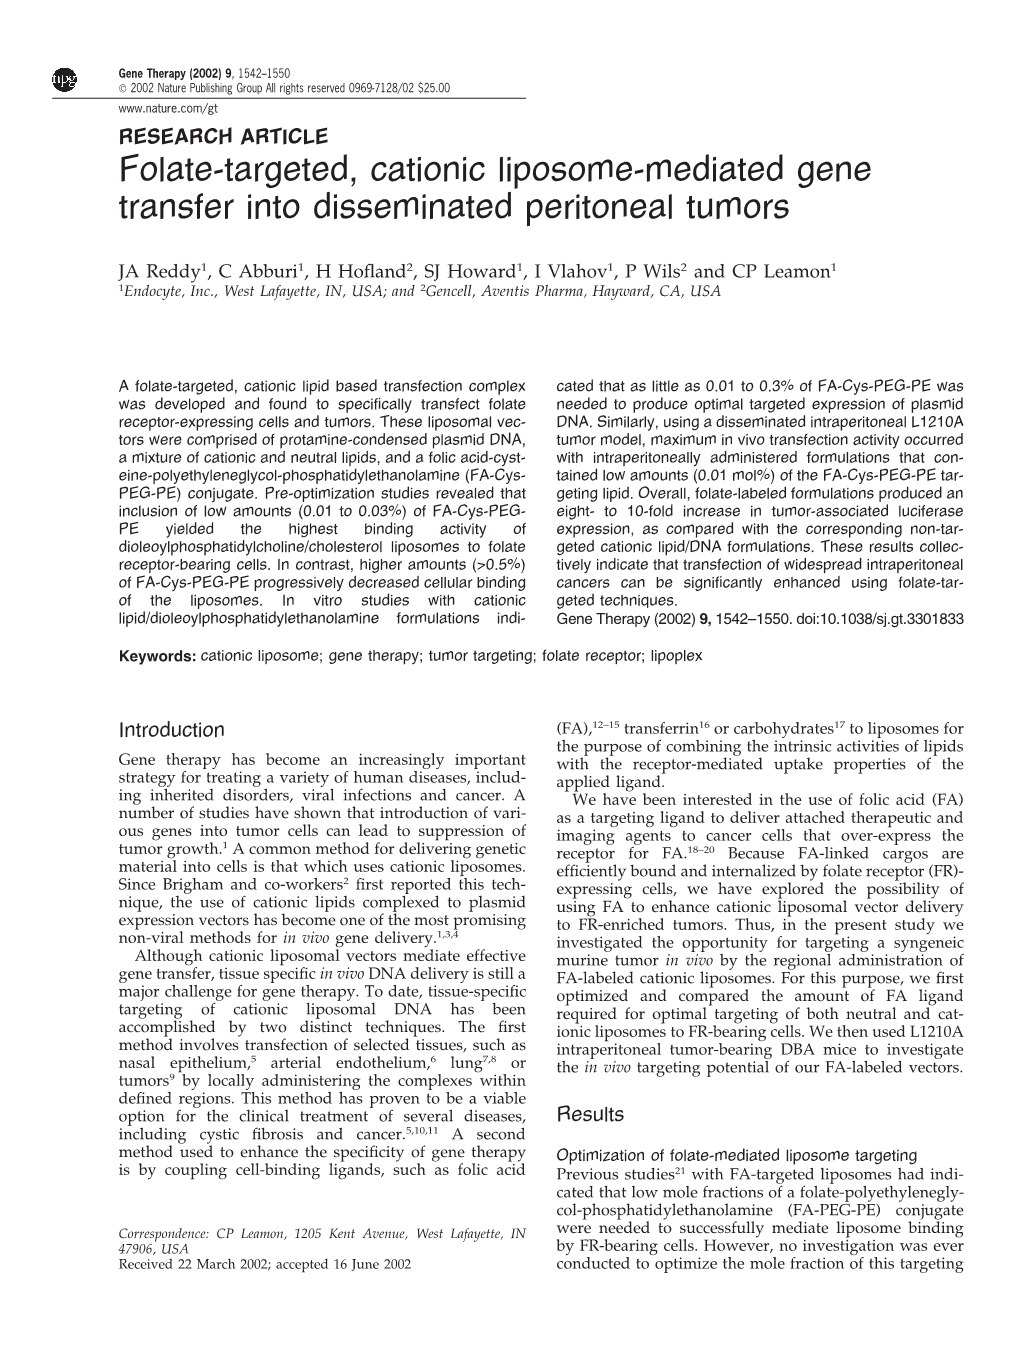 Folate-Targeted, Cationic Liposome-Mediated Gene Transfer Into Disseminated Peritoneal Tumors